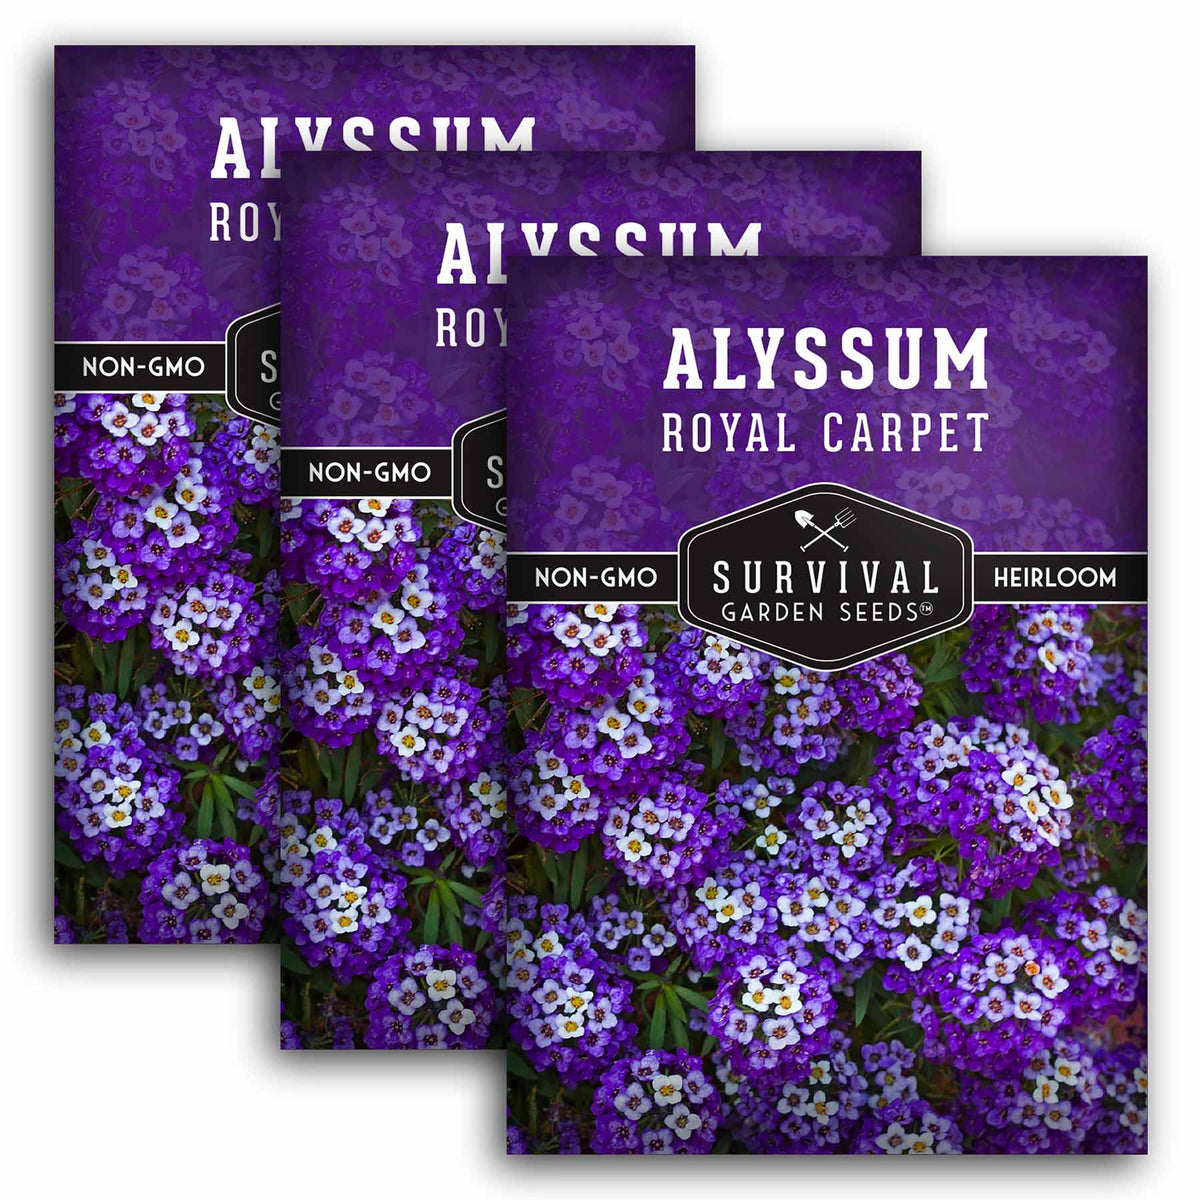 3 packets of Royal Carpet Alyssum seeds